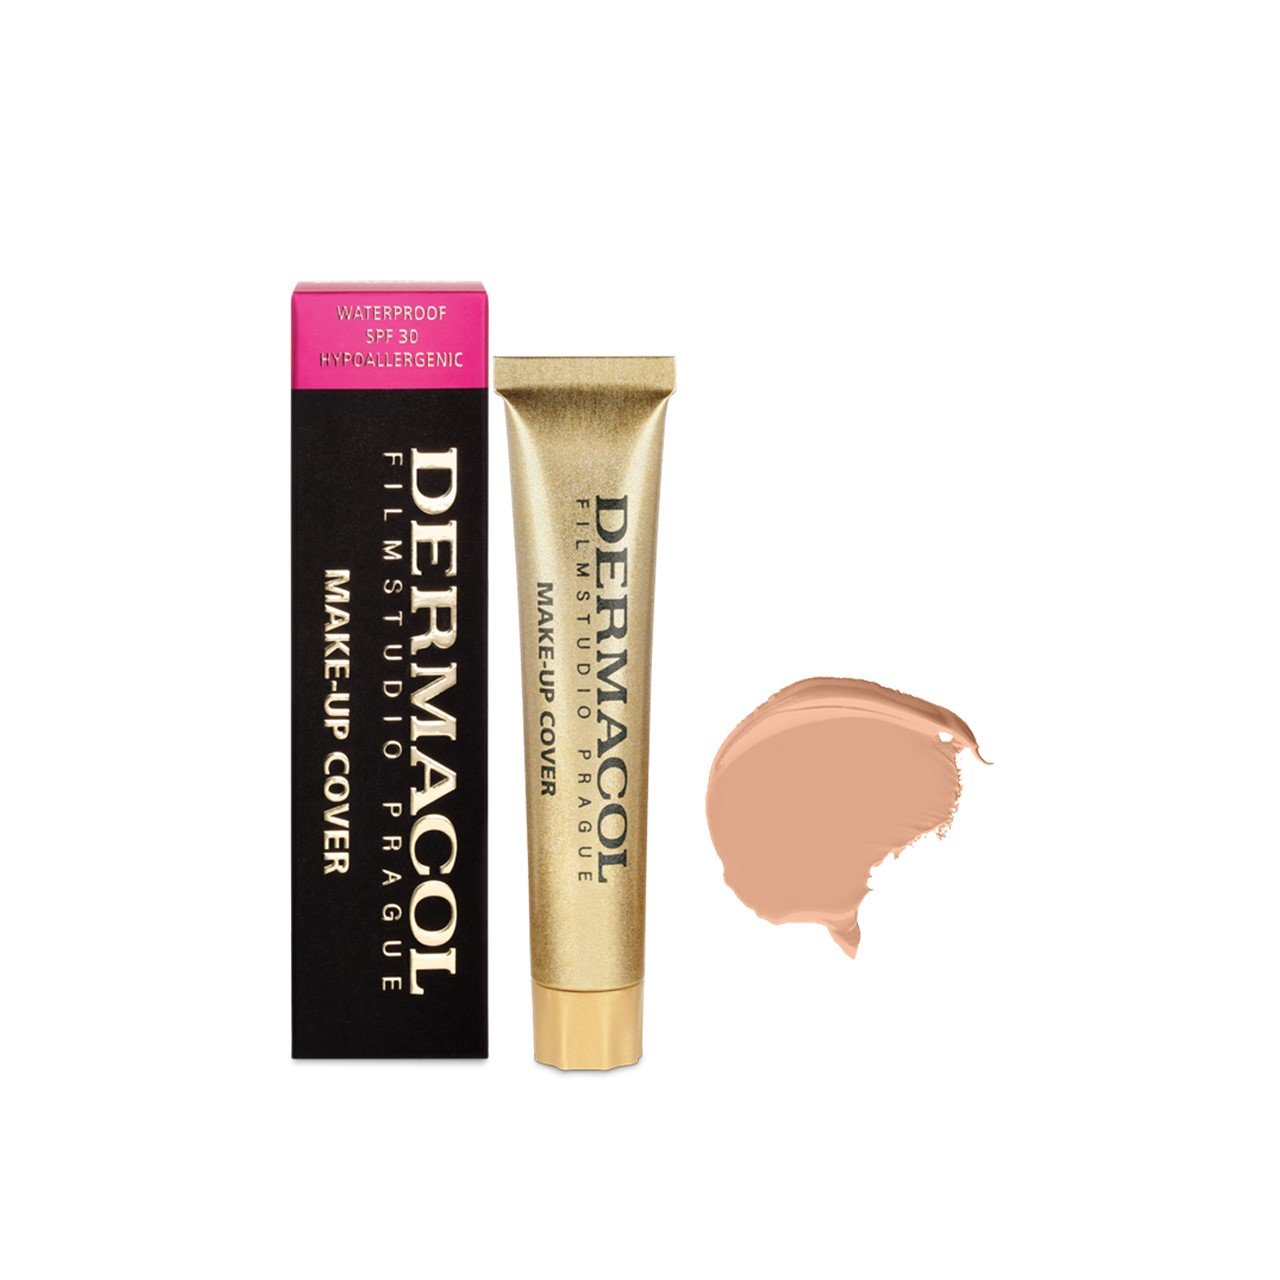 Dermacol Make-Up Cover Foundation SPF30 209 30g